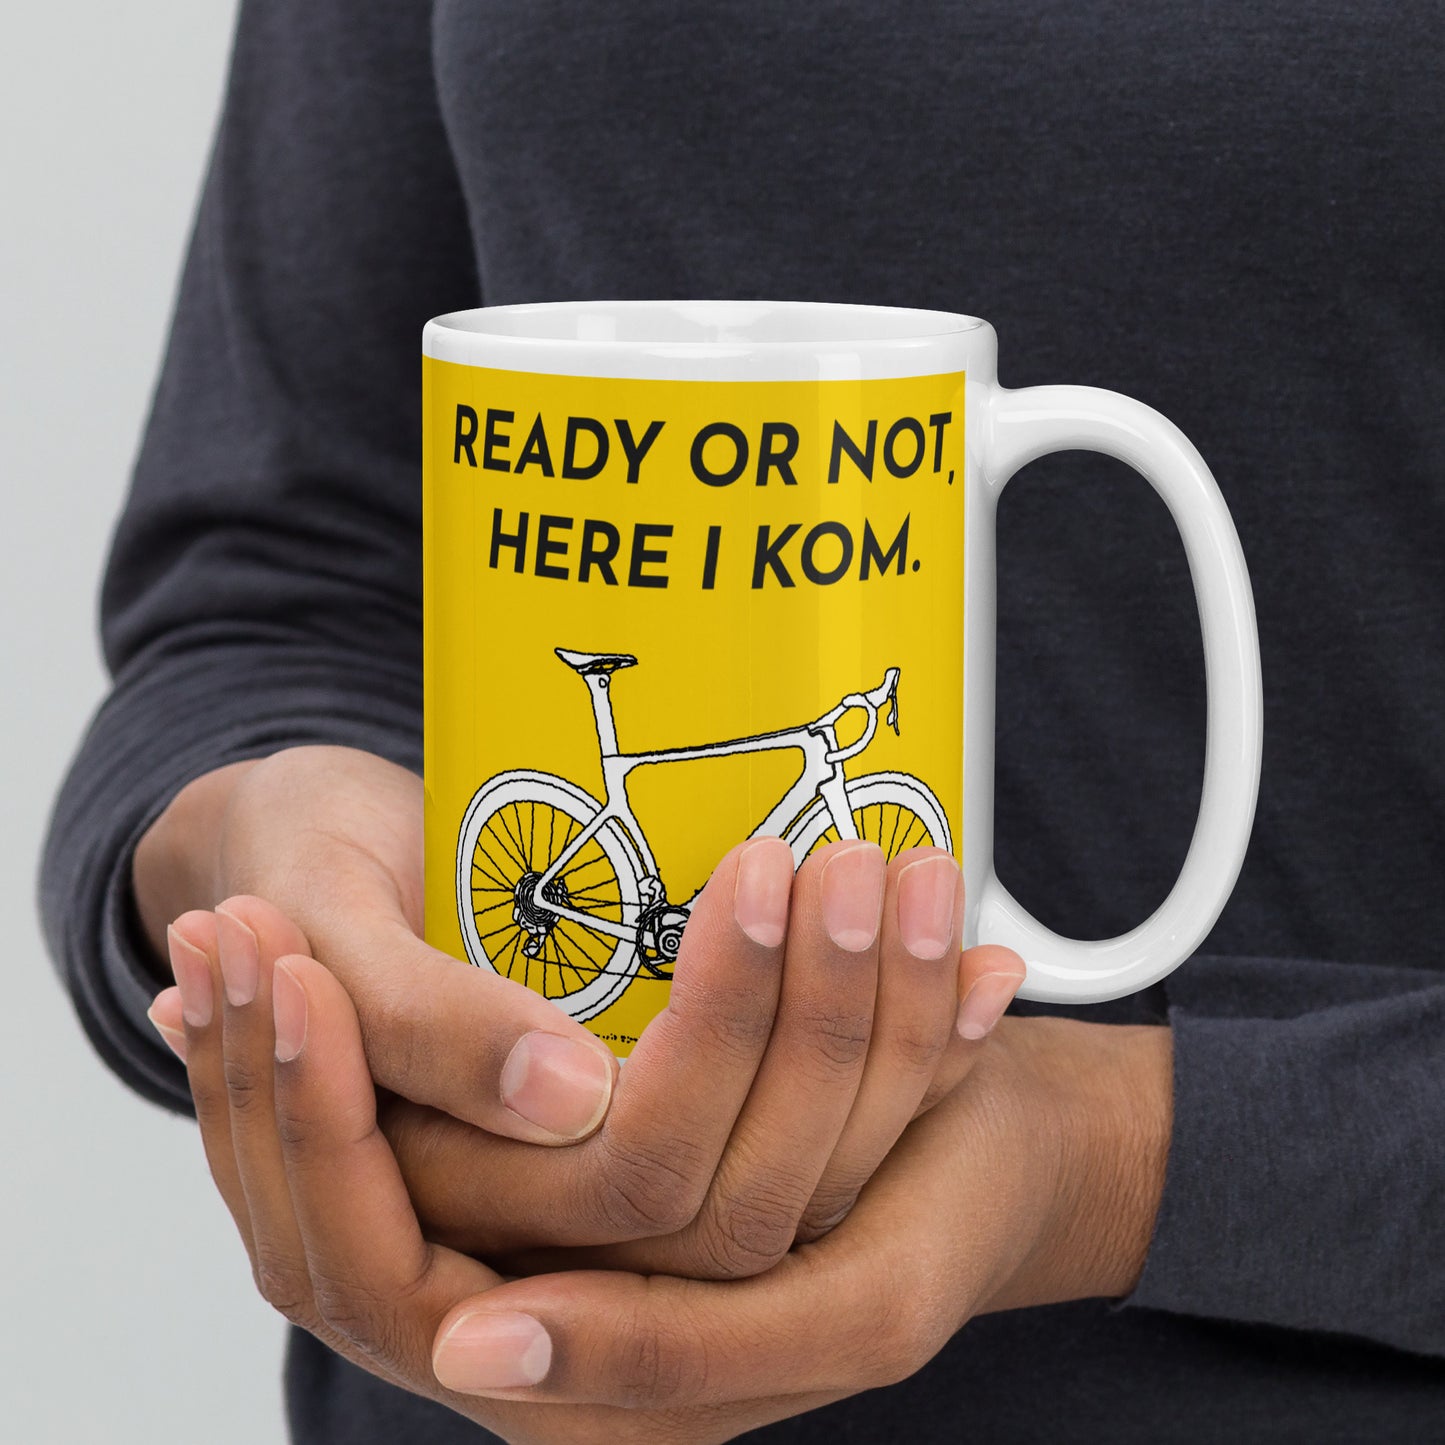 Ready Or Not, Here I KOM, Yellow Bicycle Cyclist Mug